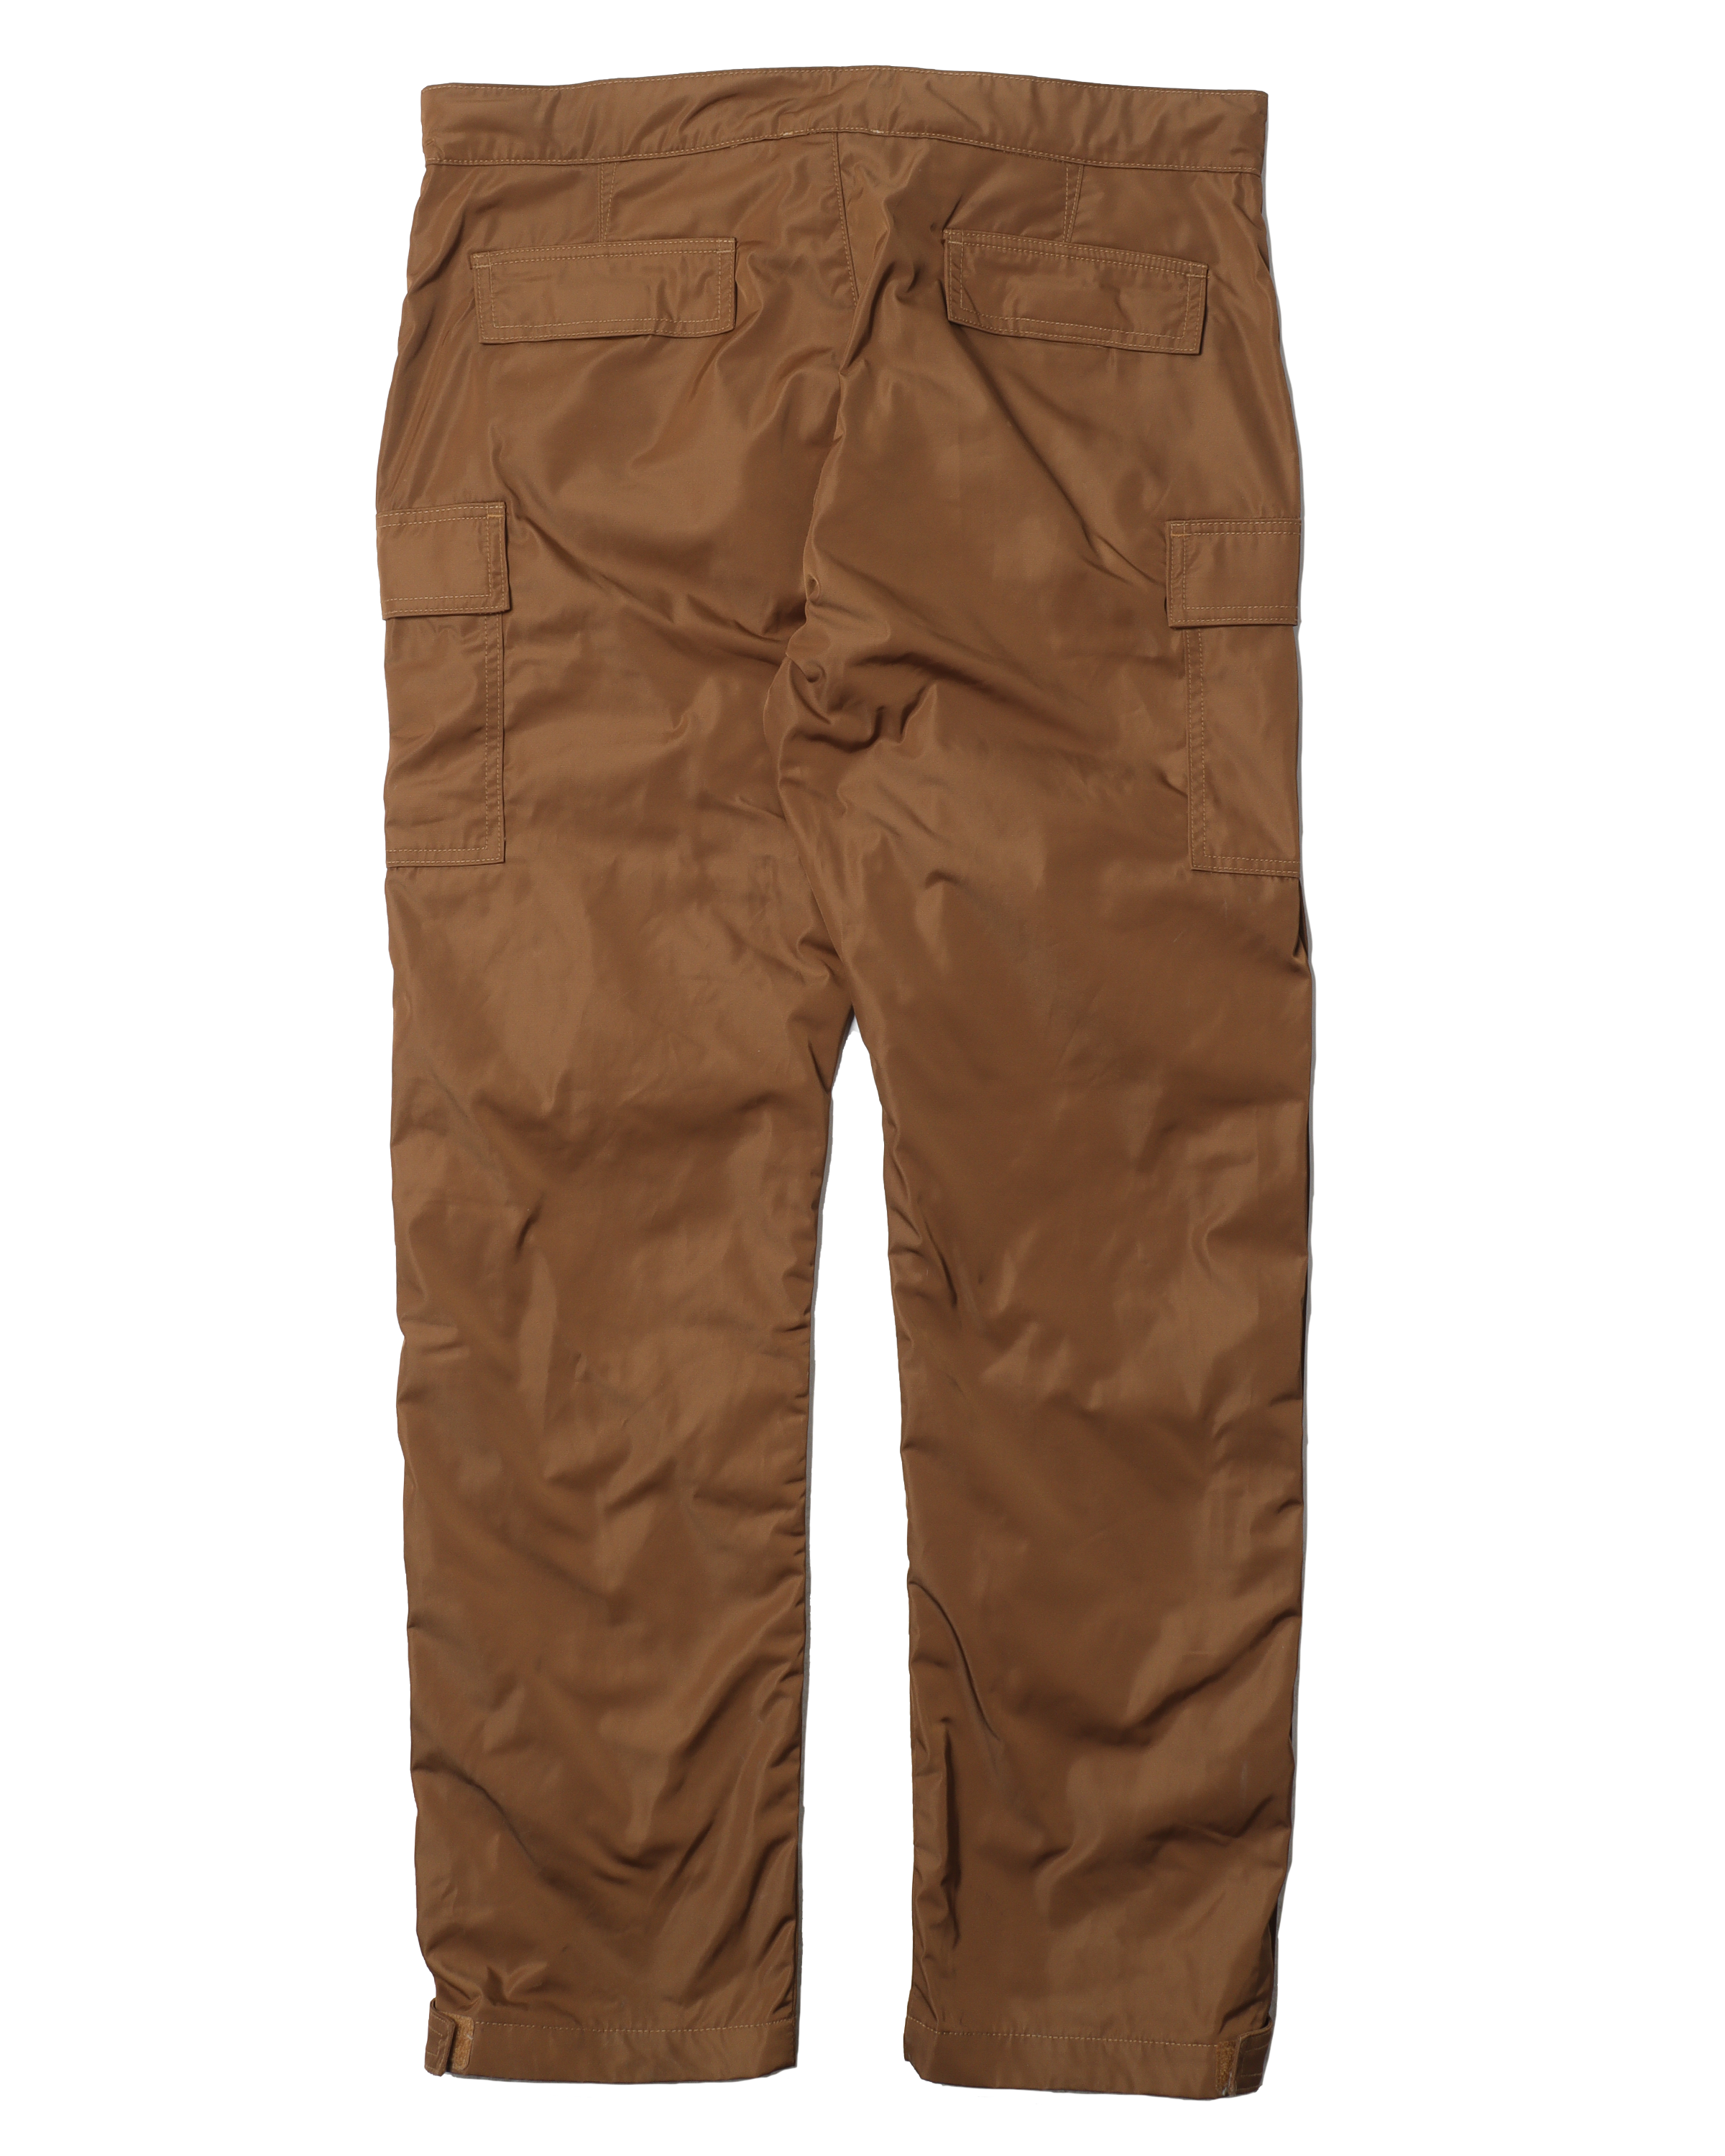 6th Collection Brown Nylon Tearaway Pants